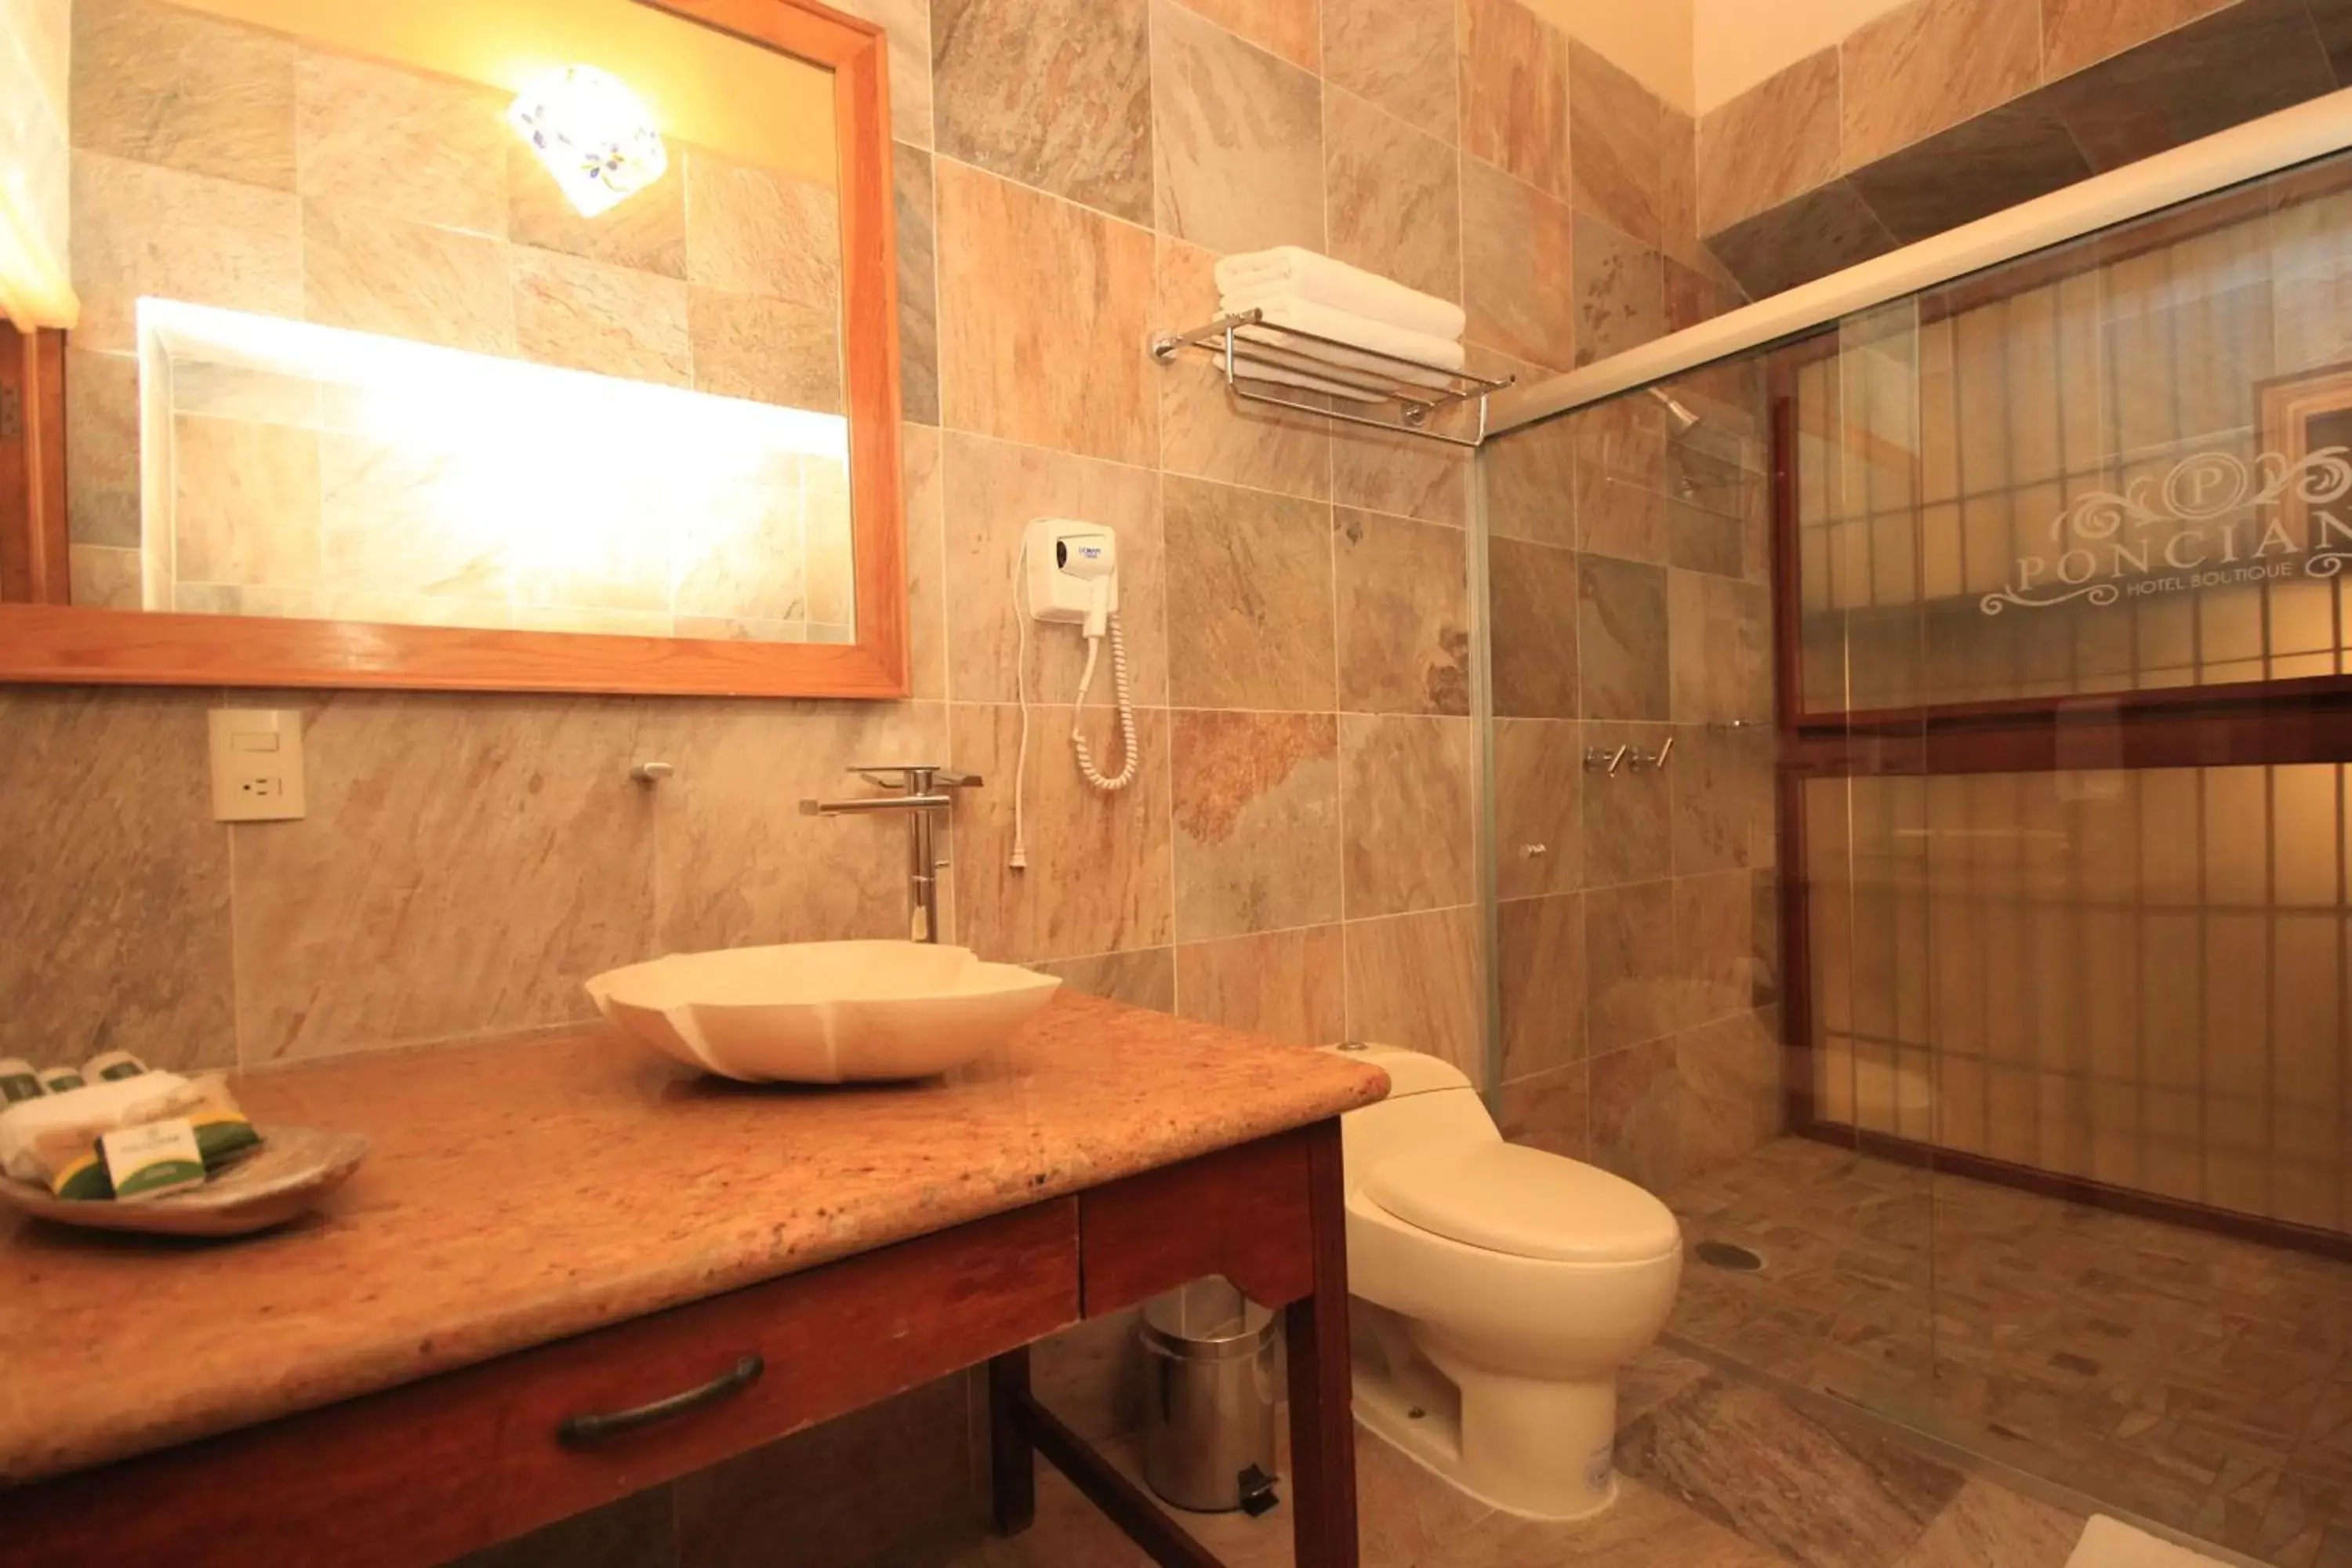 Shower, Bathroom in Hotel Boutique Ponciano